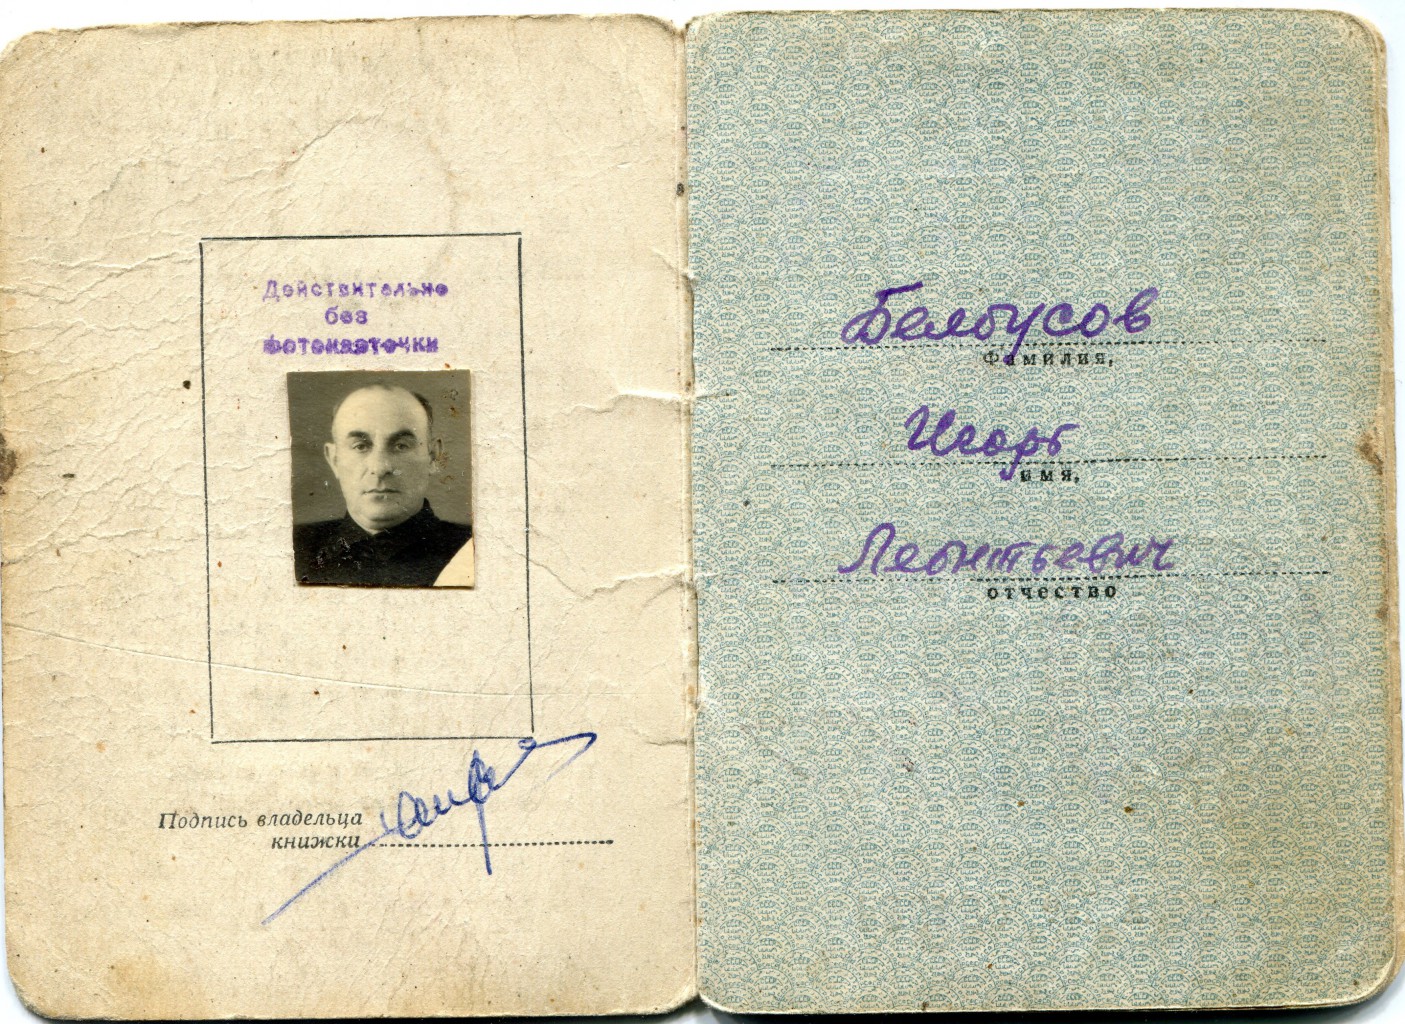 Merit certificate of Israel (Igor) Bilousov